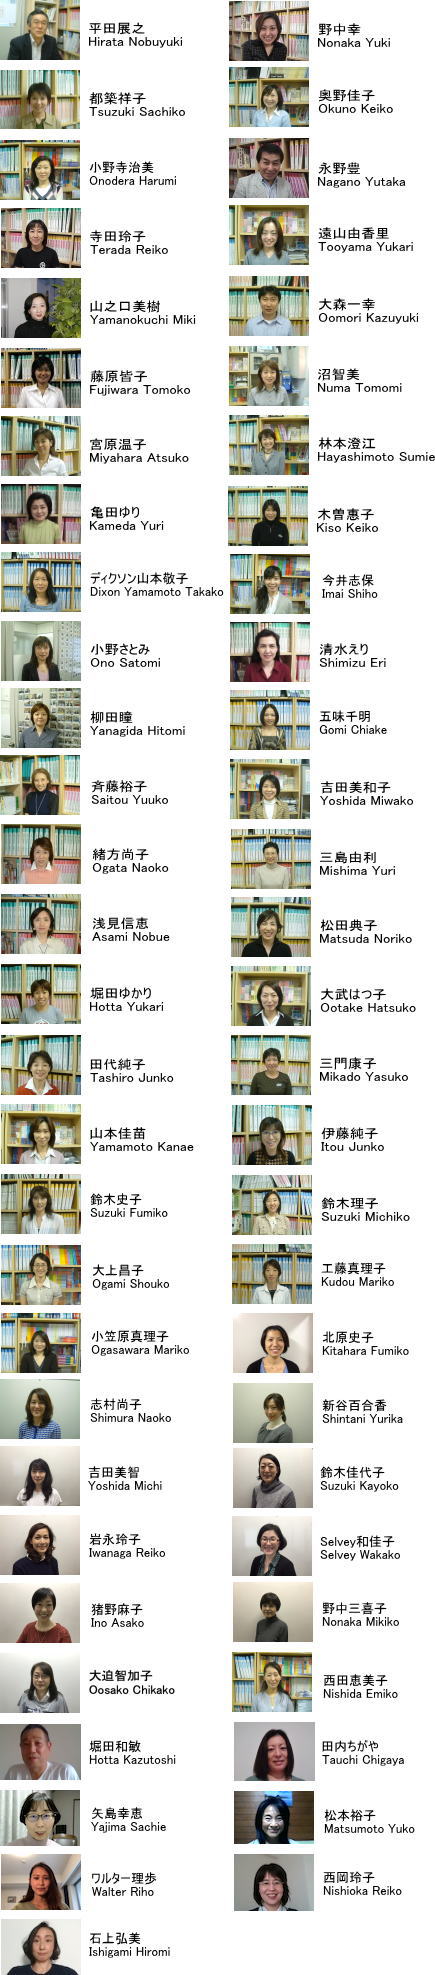 MLC Japanese teachers